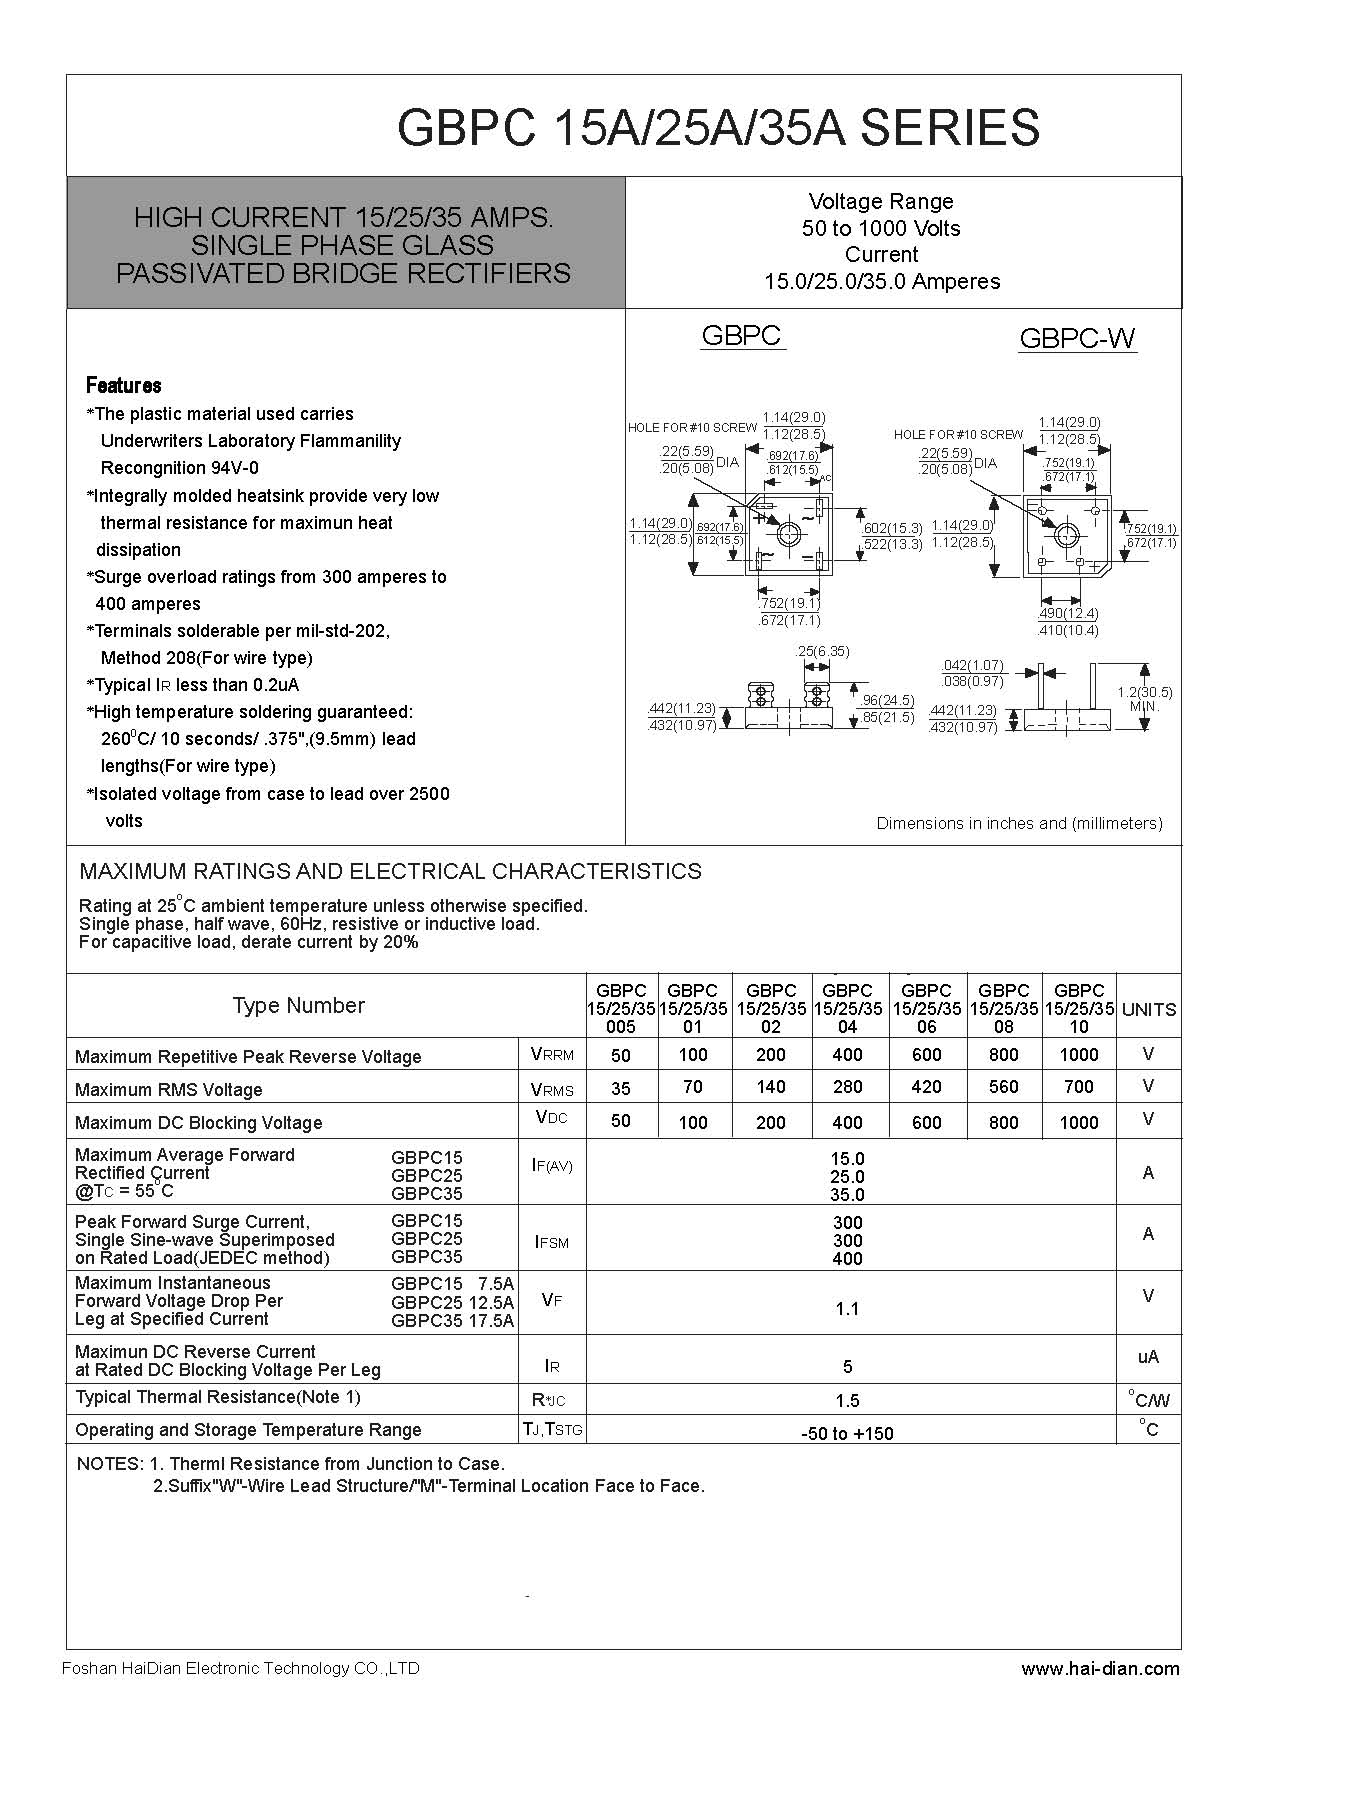 GBPC2504桥式整流器(整流桥堆)-- 佛山海电电子科技有限公司